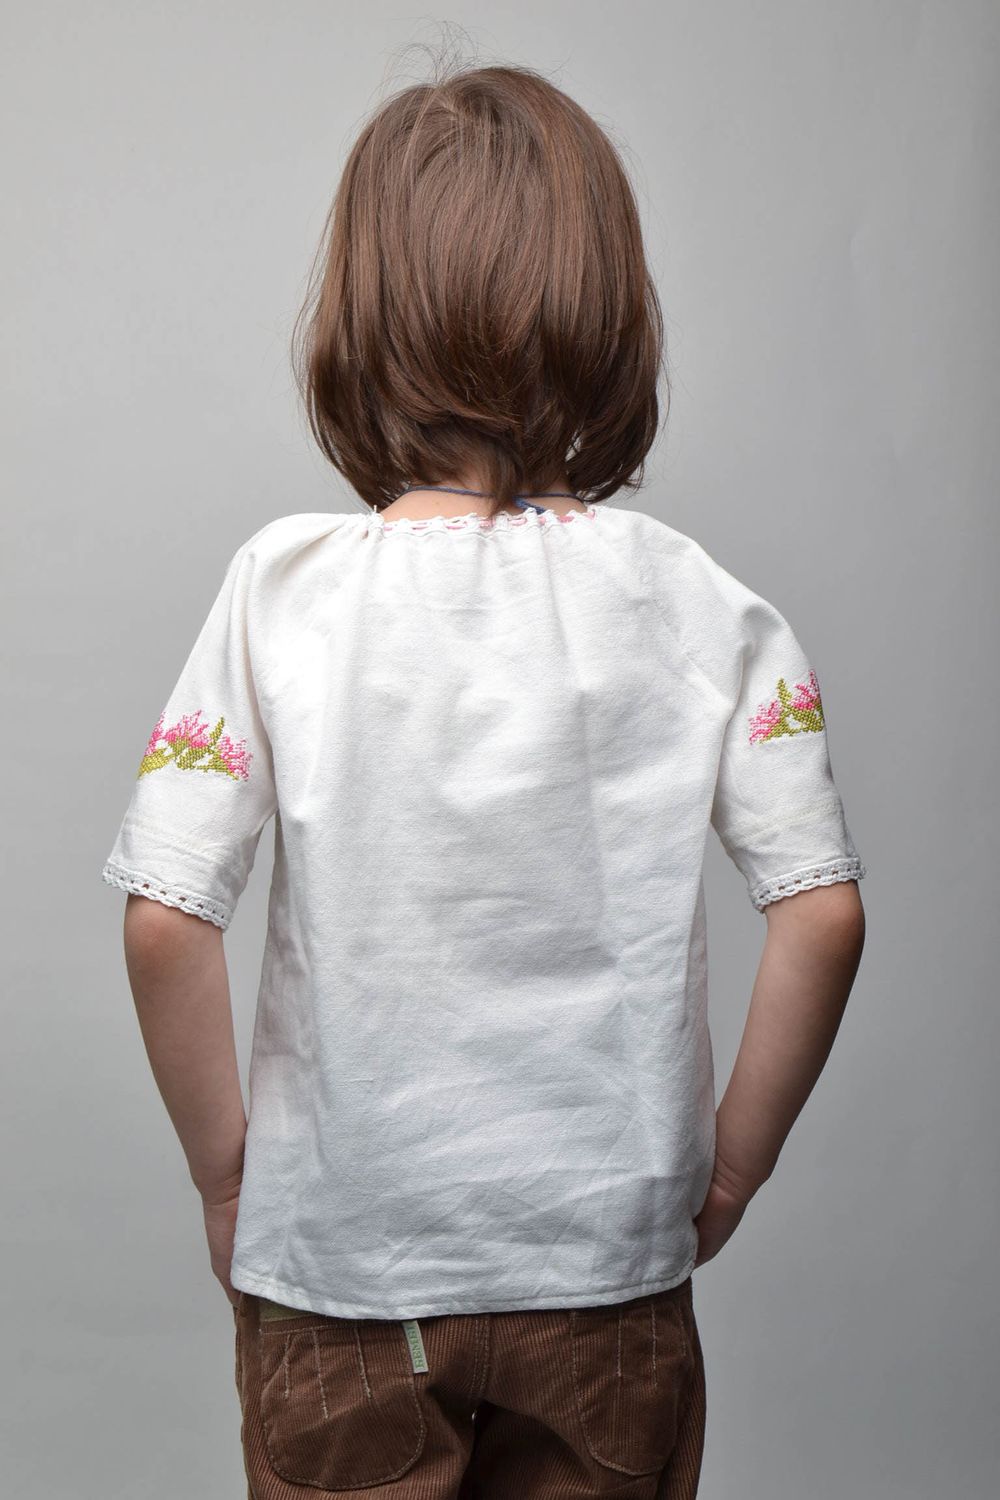 Children's cross stitch embroidered shirt photo 4